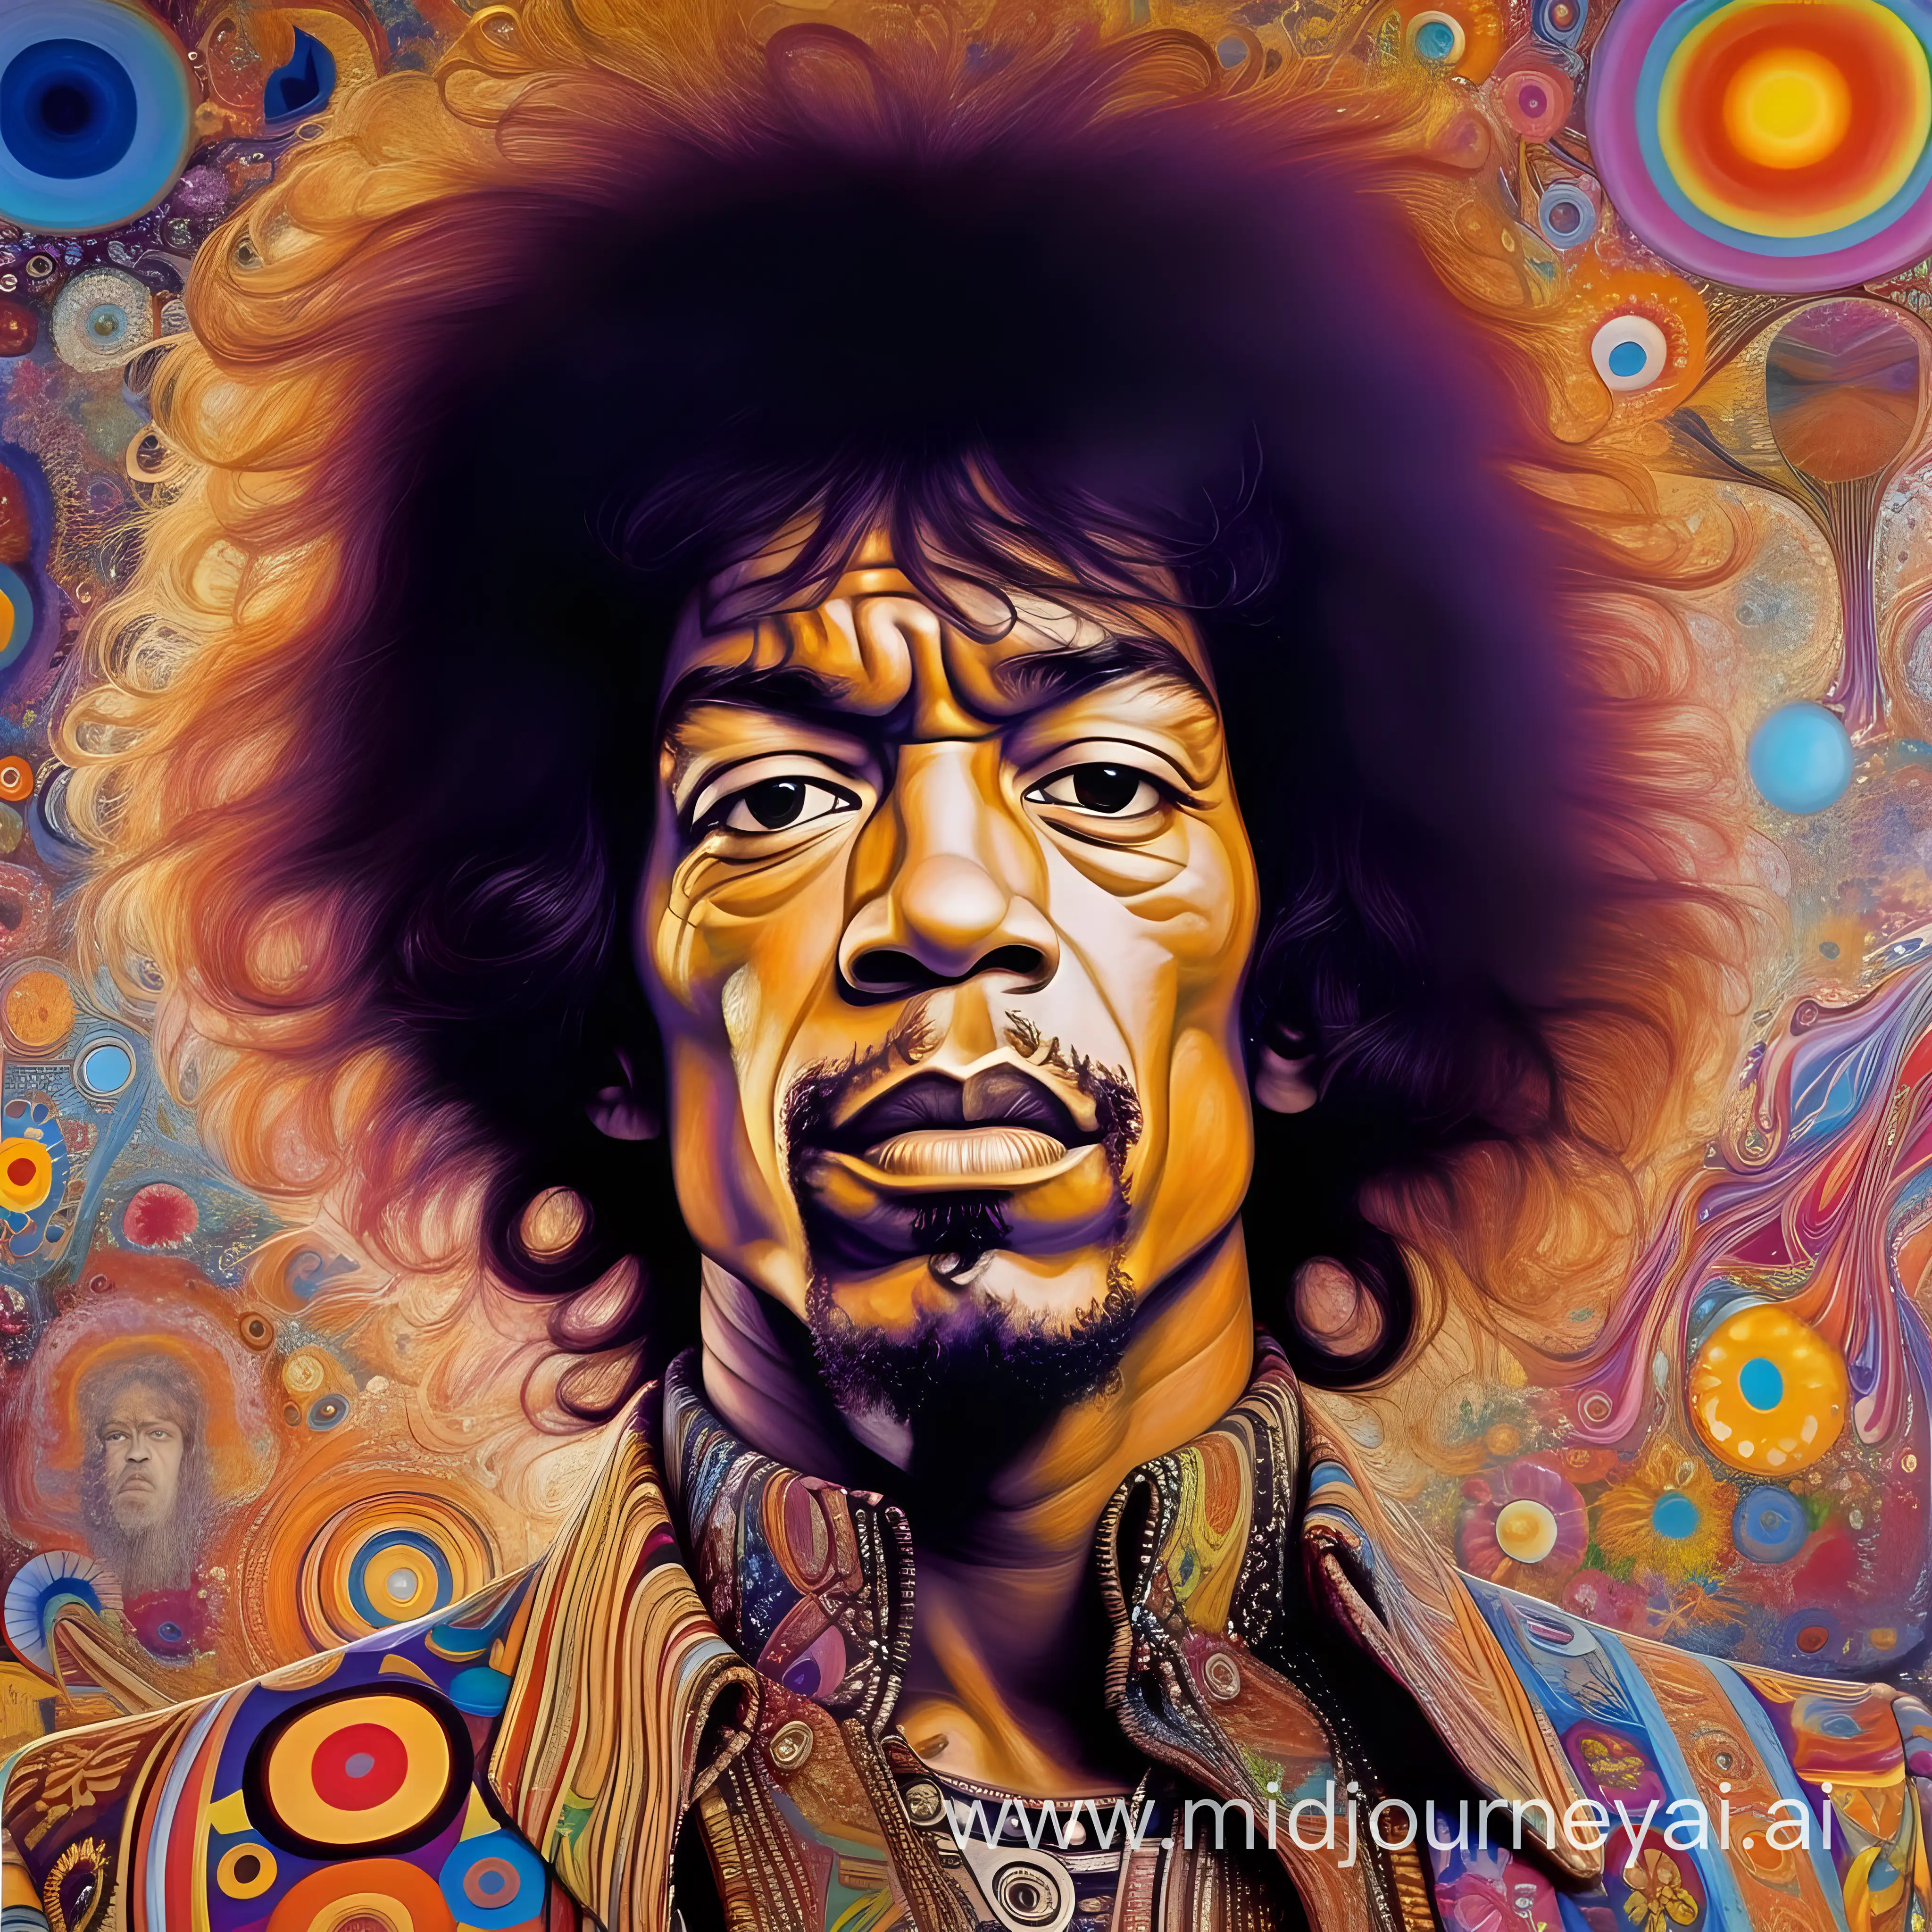 Psychedelic Fusion Gustav Klimt Meets Jackson Pollock in a Trippy Hippie Jimi Hendrix Experience